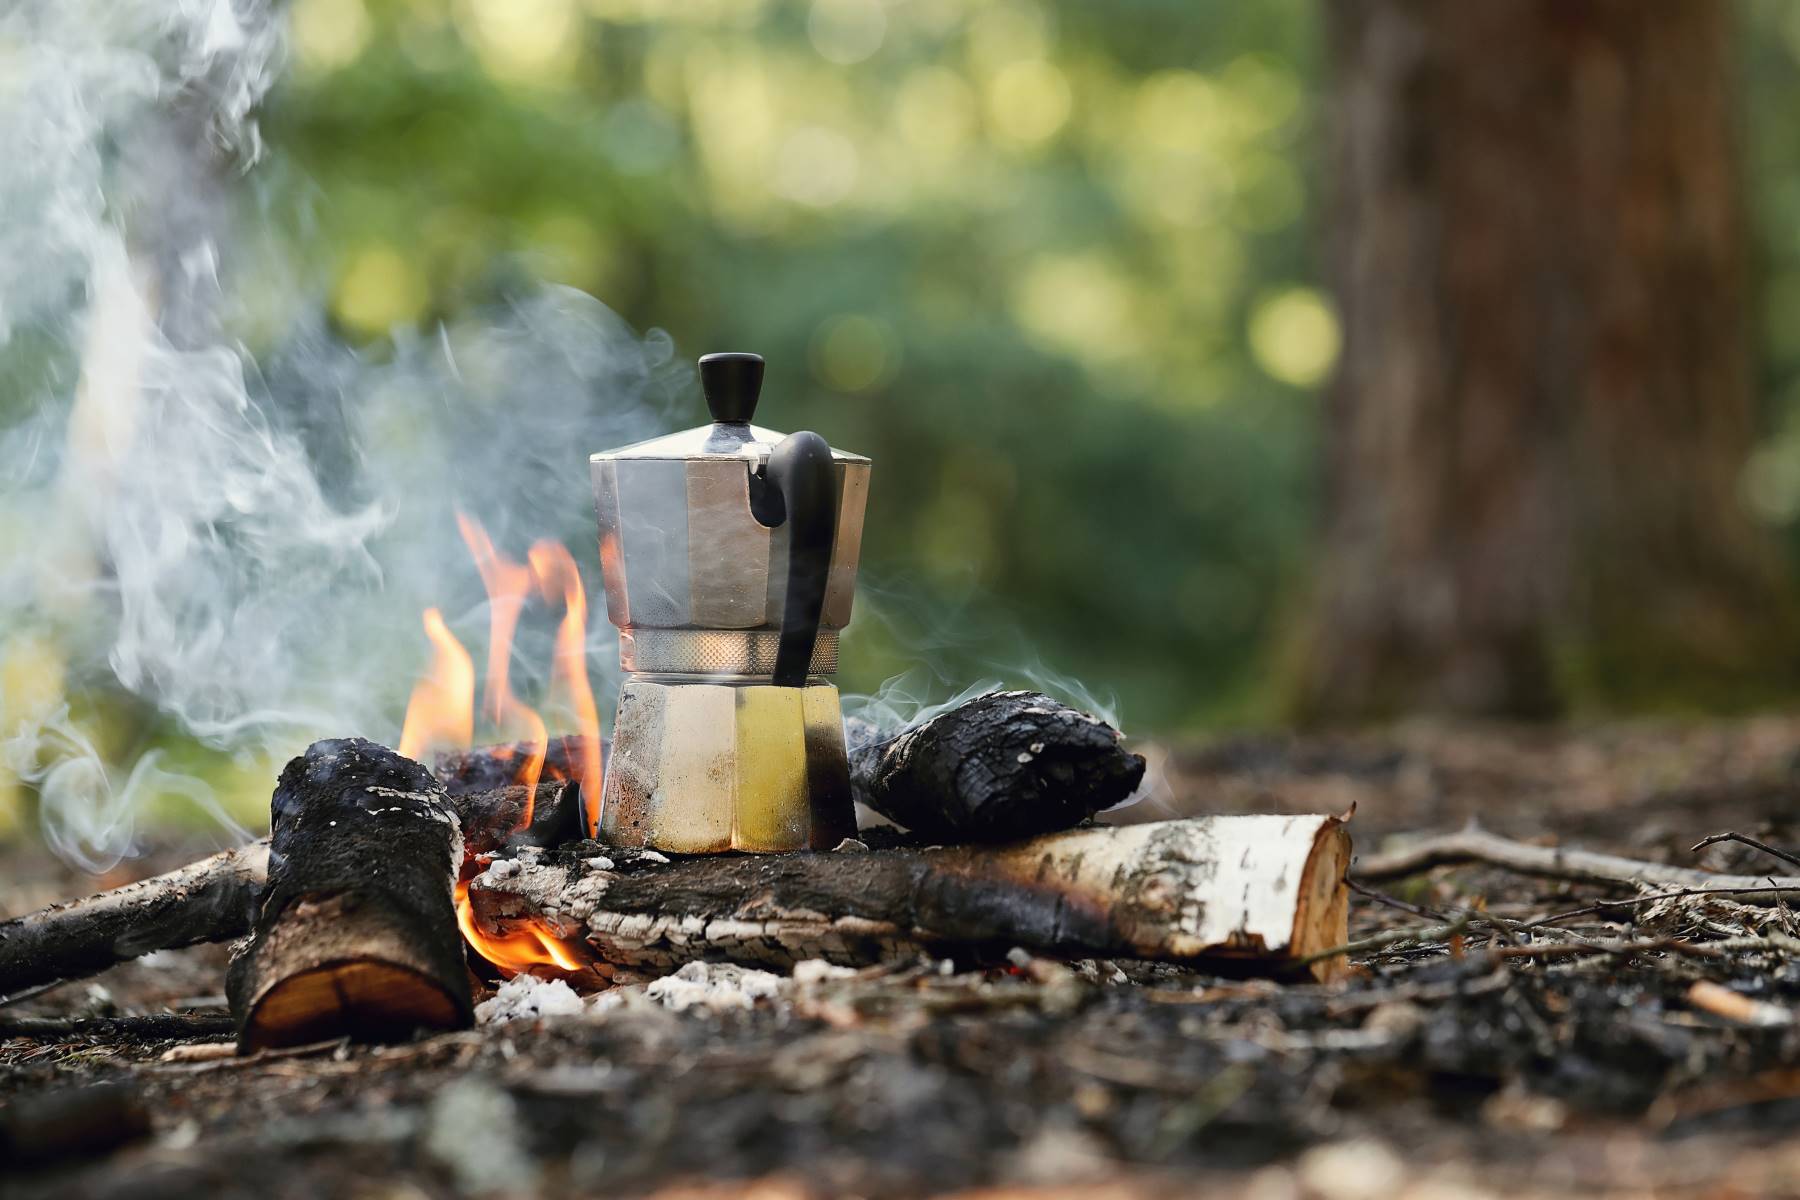 Campfire coffee pot heating up on an open fire